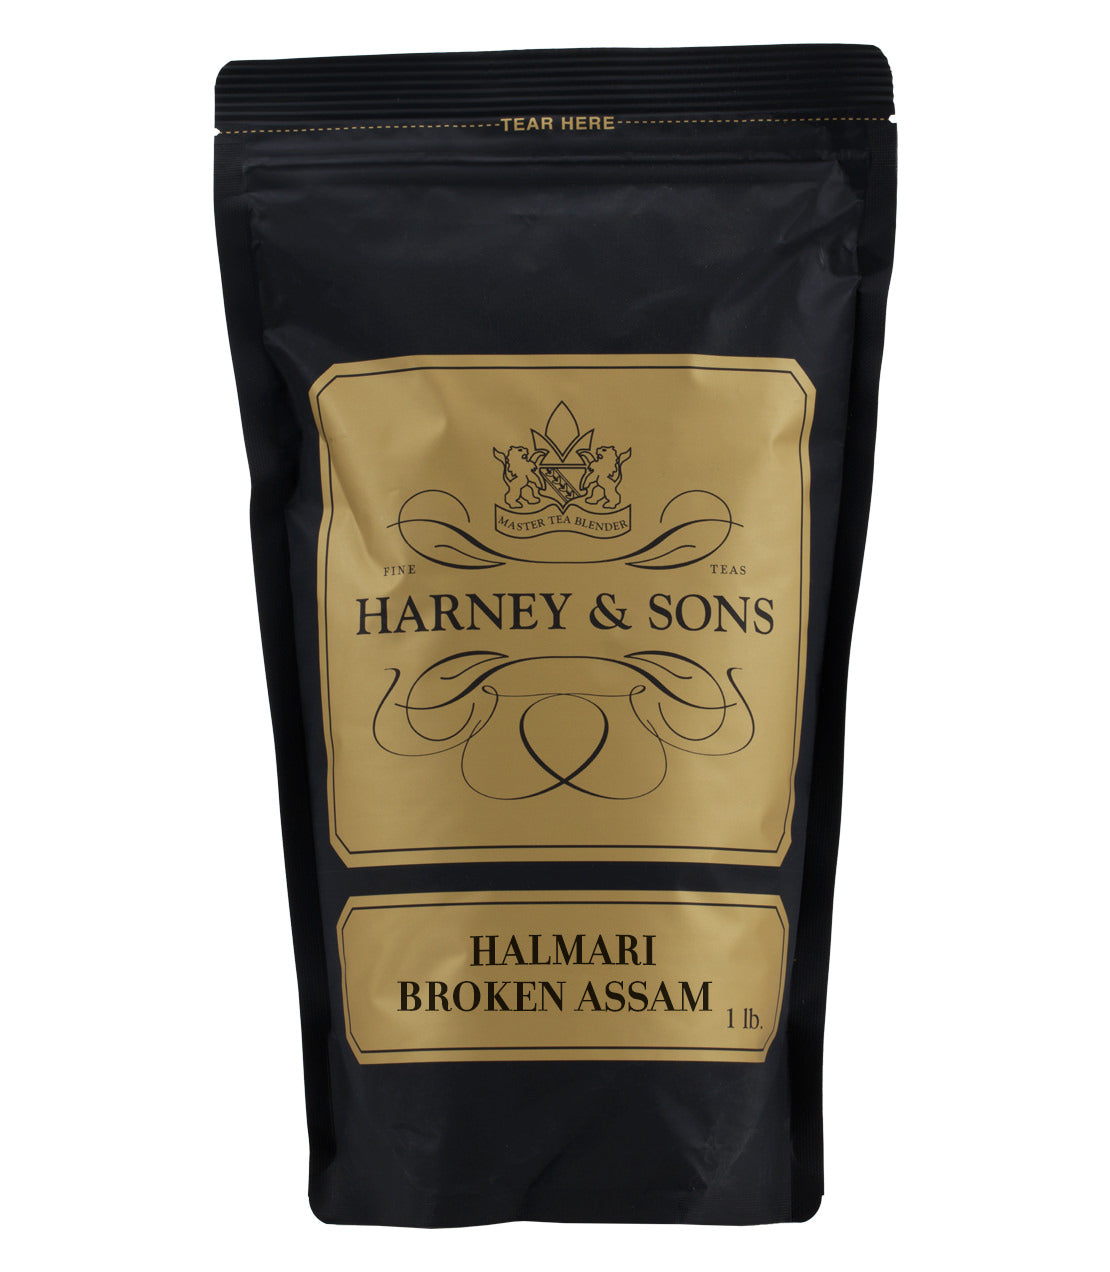 Halmari Broken Assam - Loose 1 lb. Bag - Harney & Sons Fine Teas